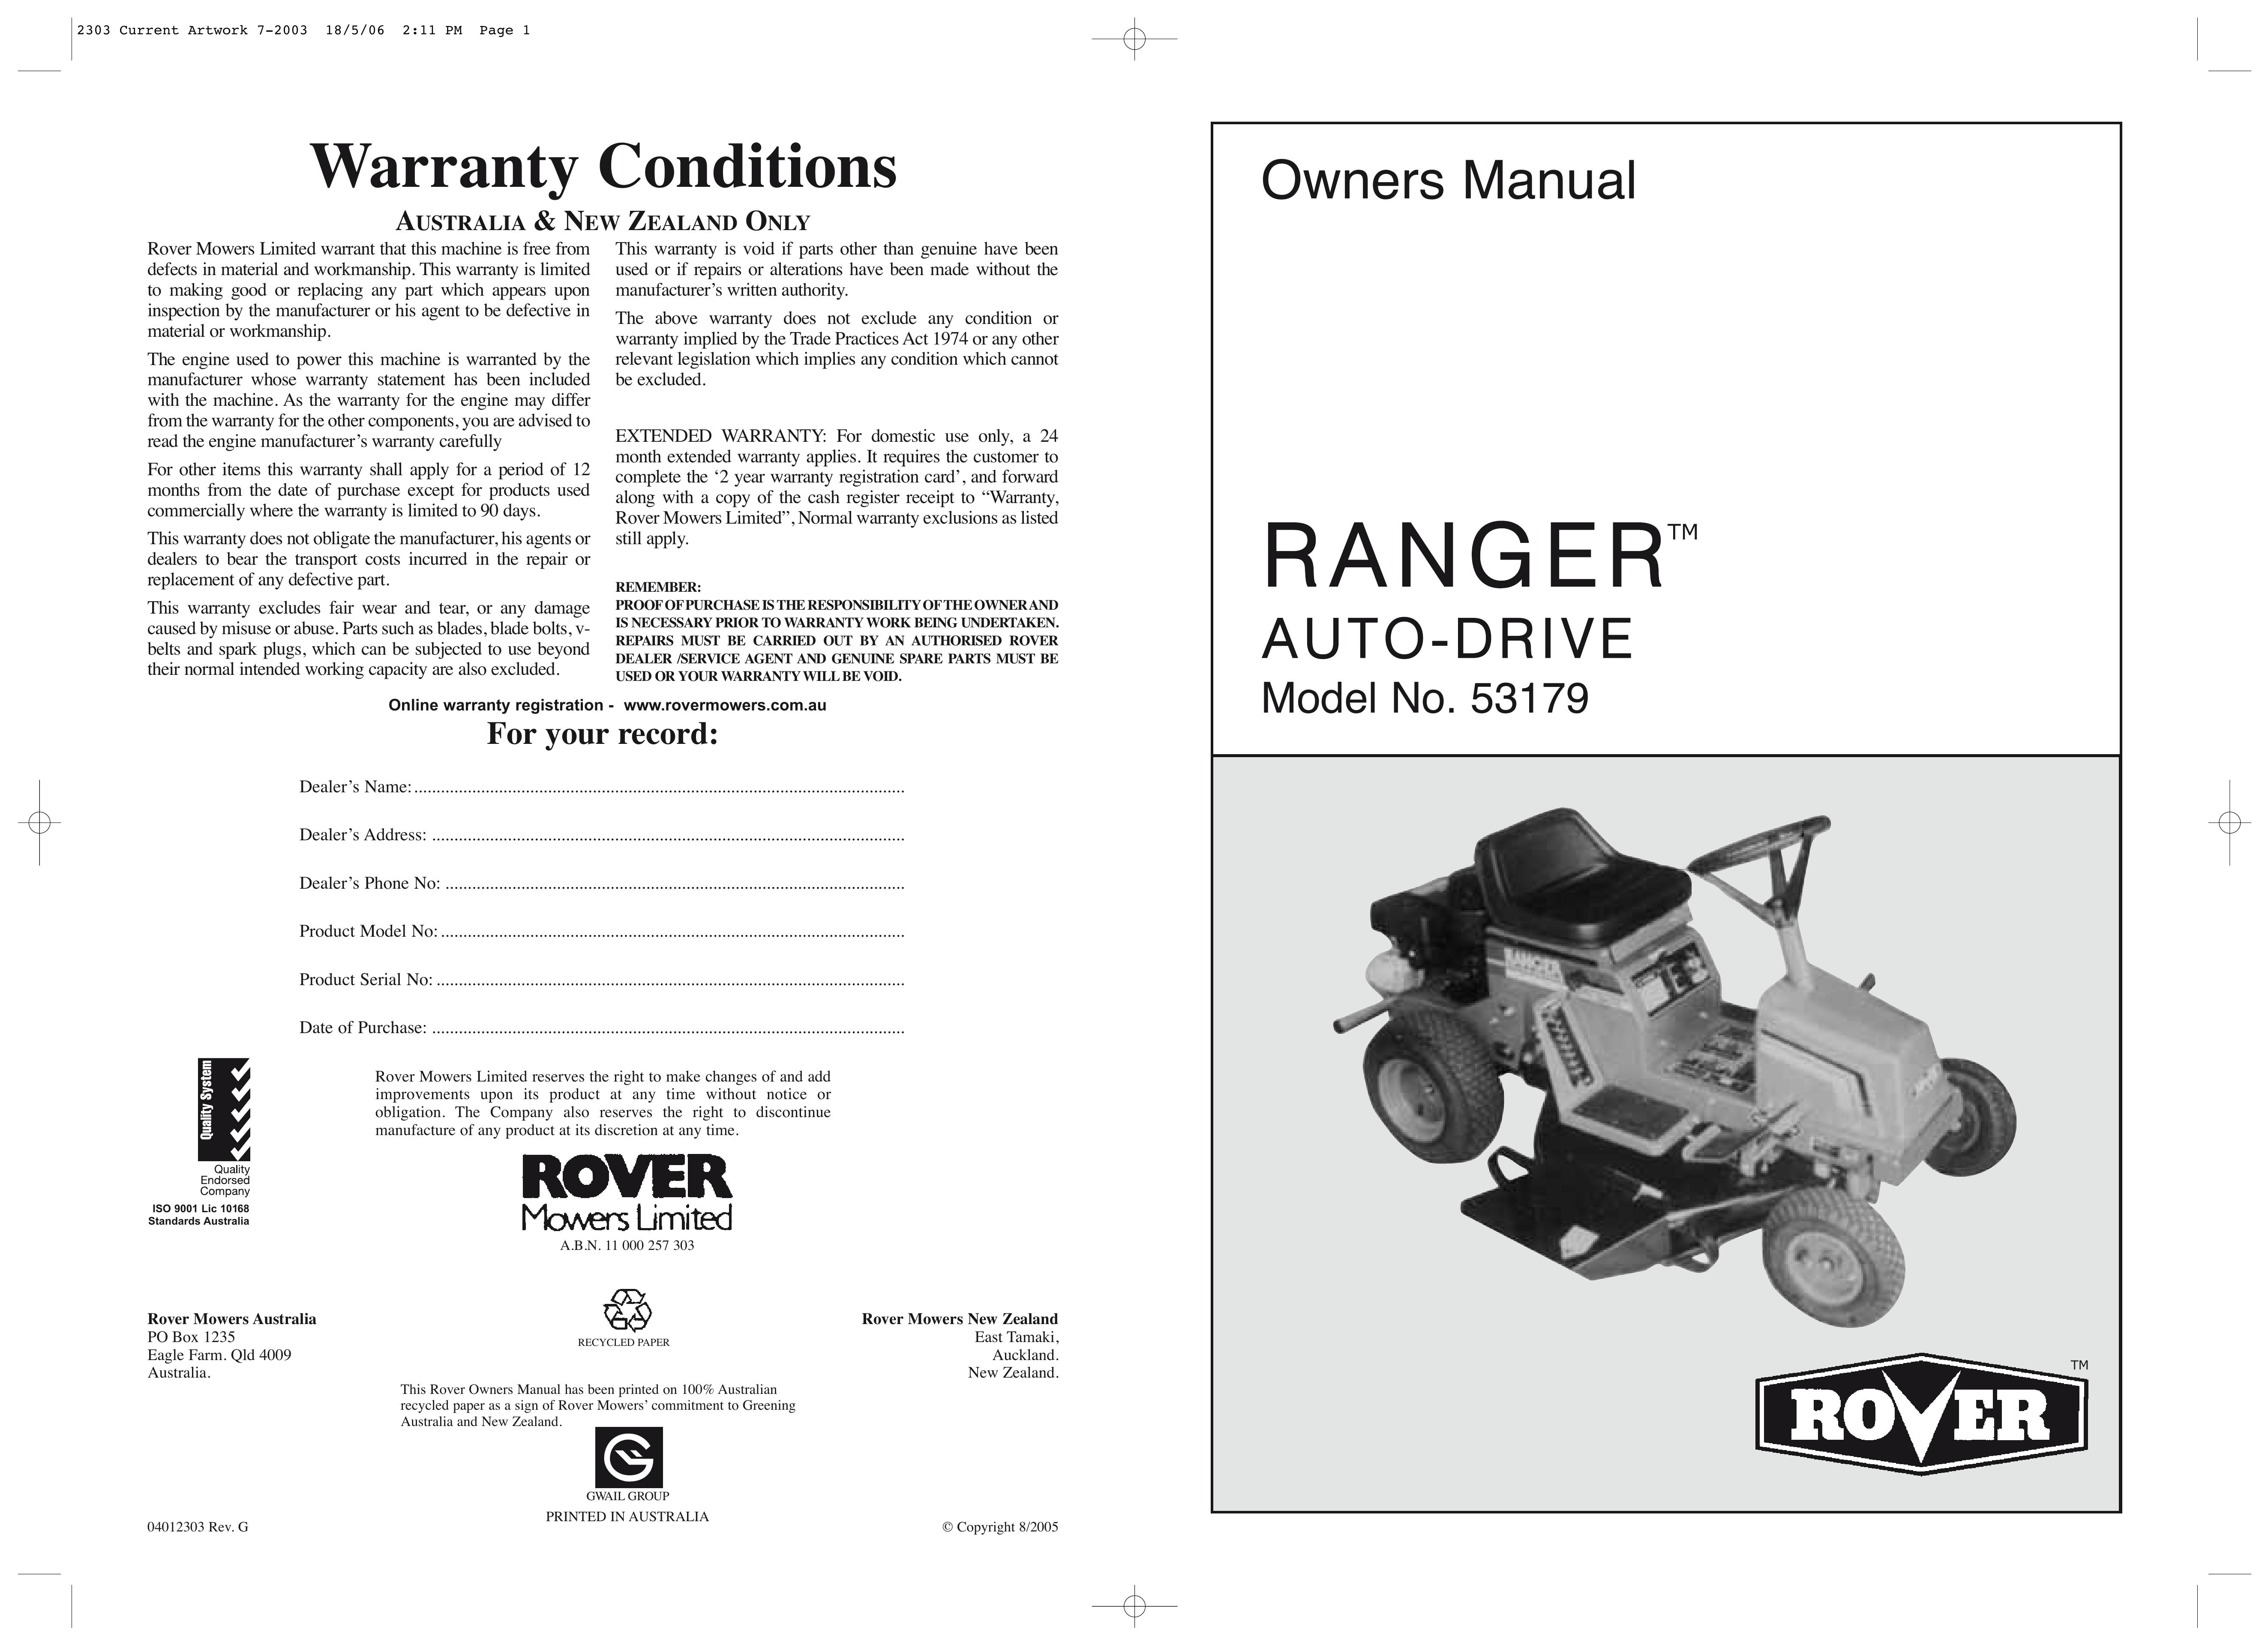 Rover 53179 Lawn Mower User Manual